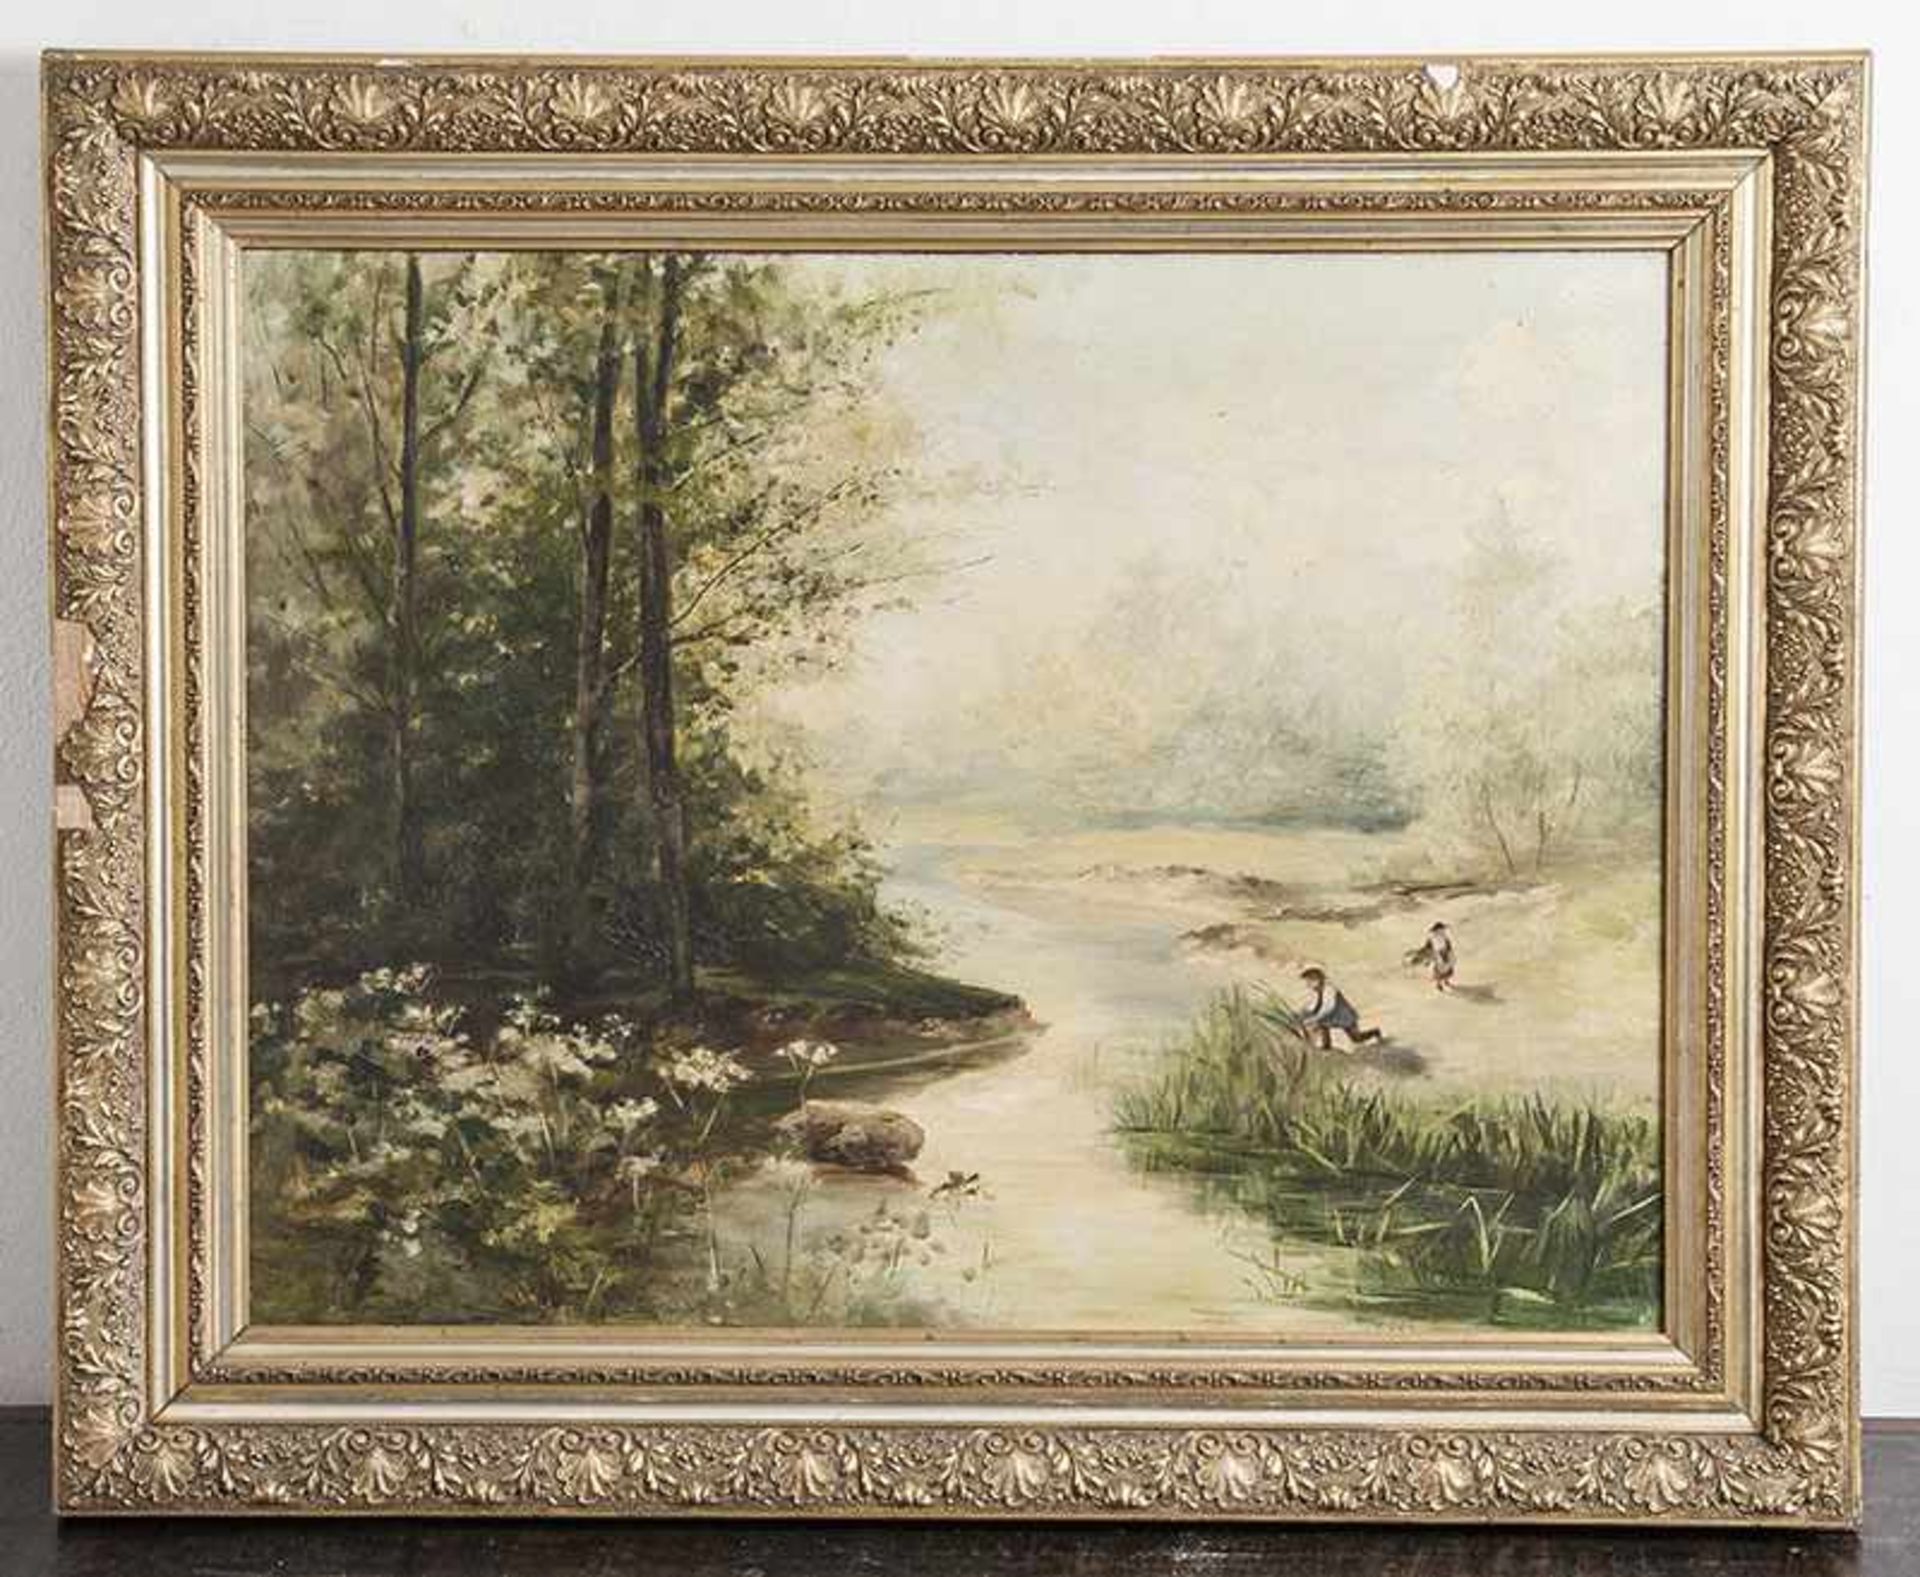 Unbekannter Künstler (20. Jahrhundert), Schilfsammler am Flußufer, Öl/Lw. Ca. 56 x 73 cm, gerahmt.